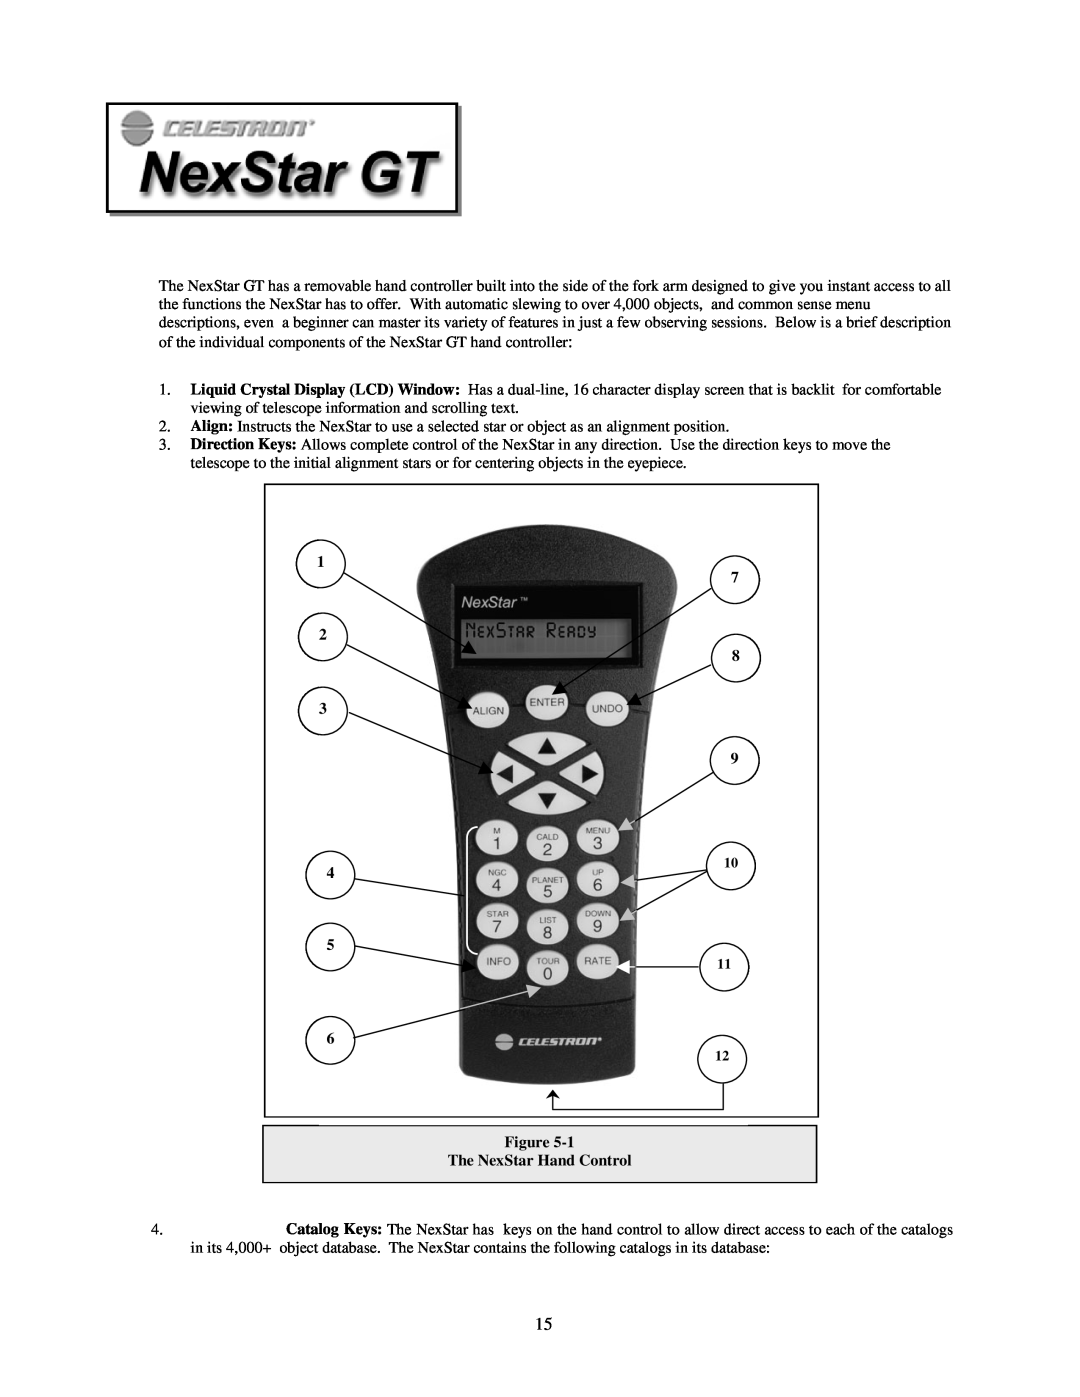 Celestron NexStar HC manual 1 2 3 4 5, 7 8 9, Figure The NexStar Hand Control 